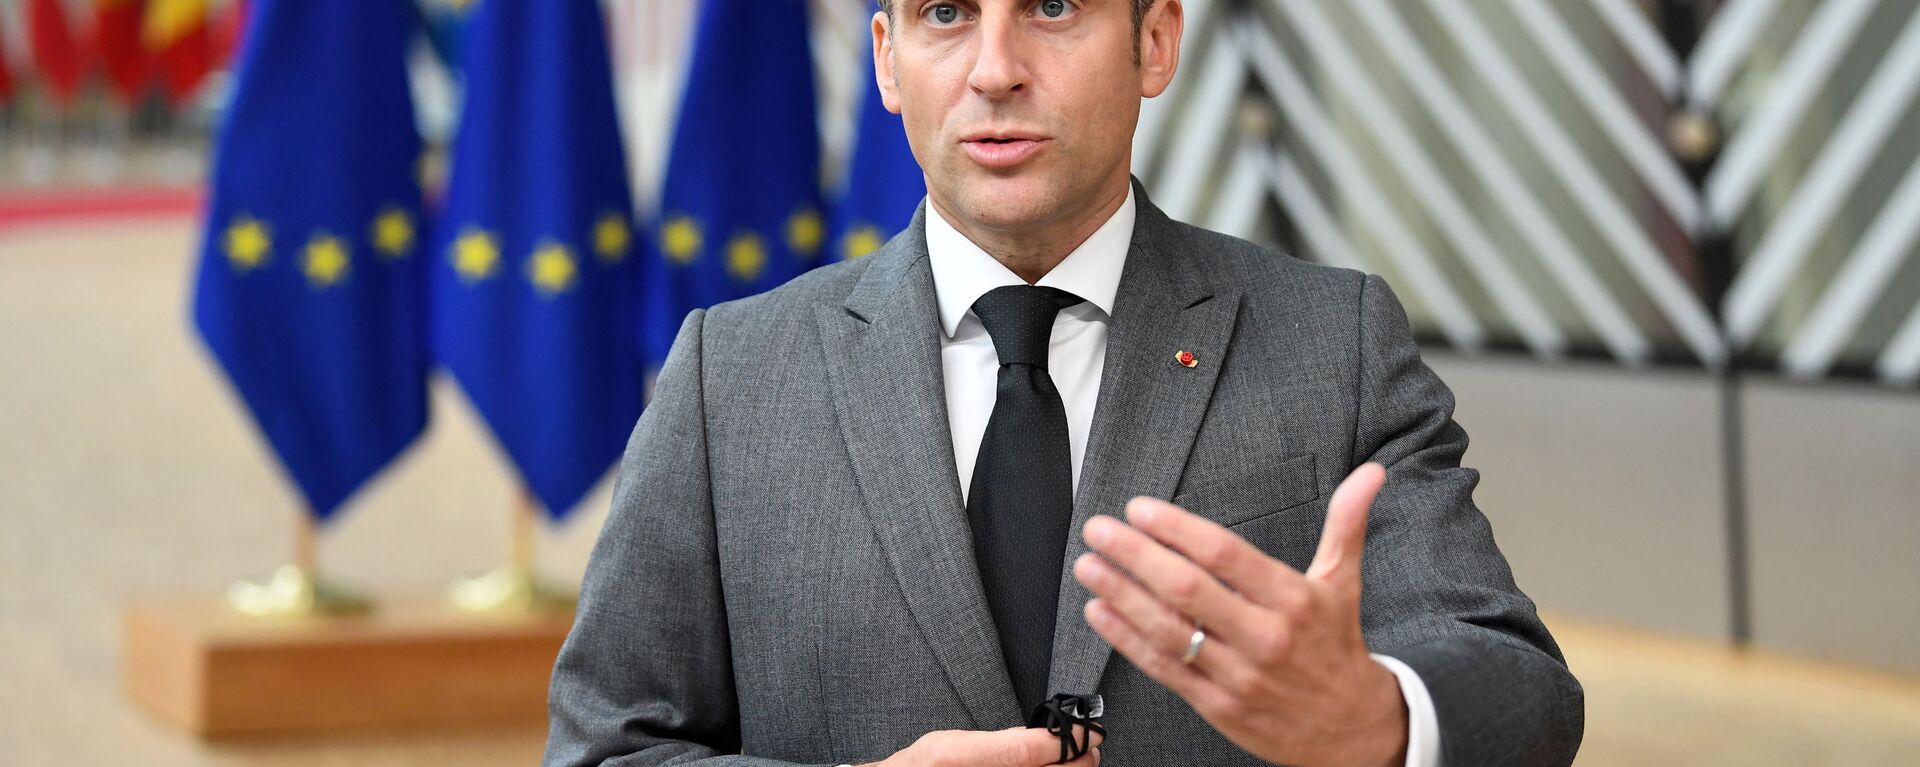 President Macron Orders Probes Into Pegasus Spyware Case, Prime Minister Castex Says - Sputnik International, 1920, 21.07.2021